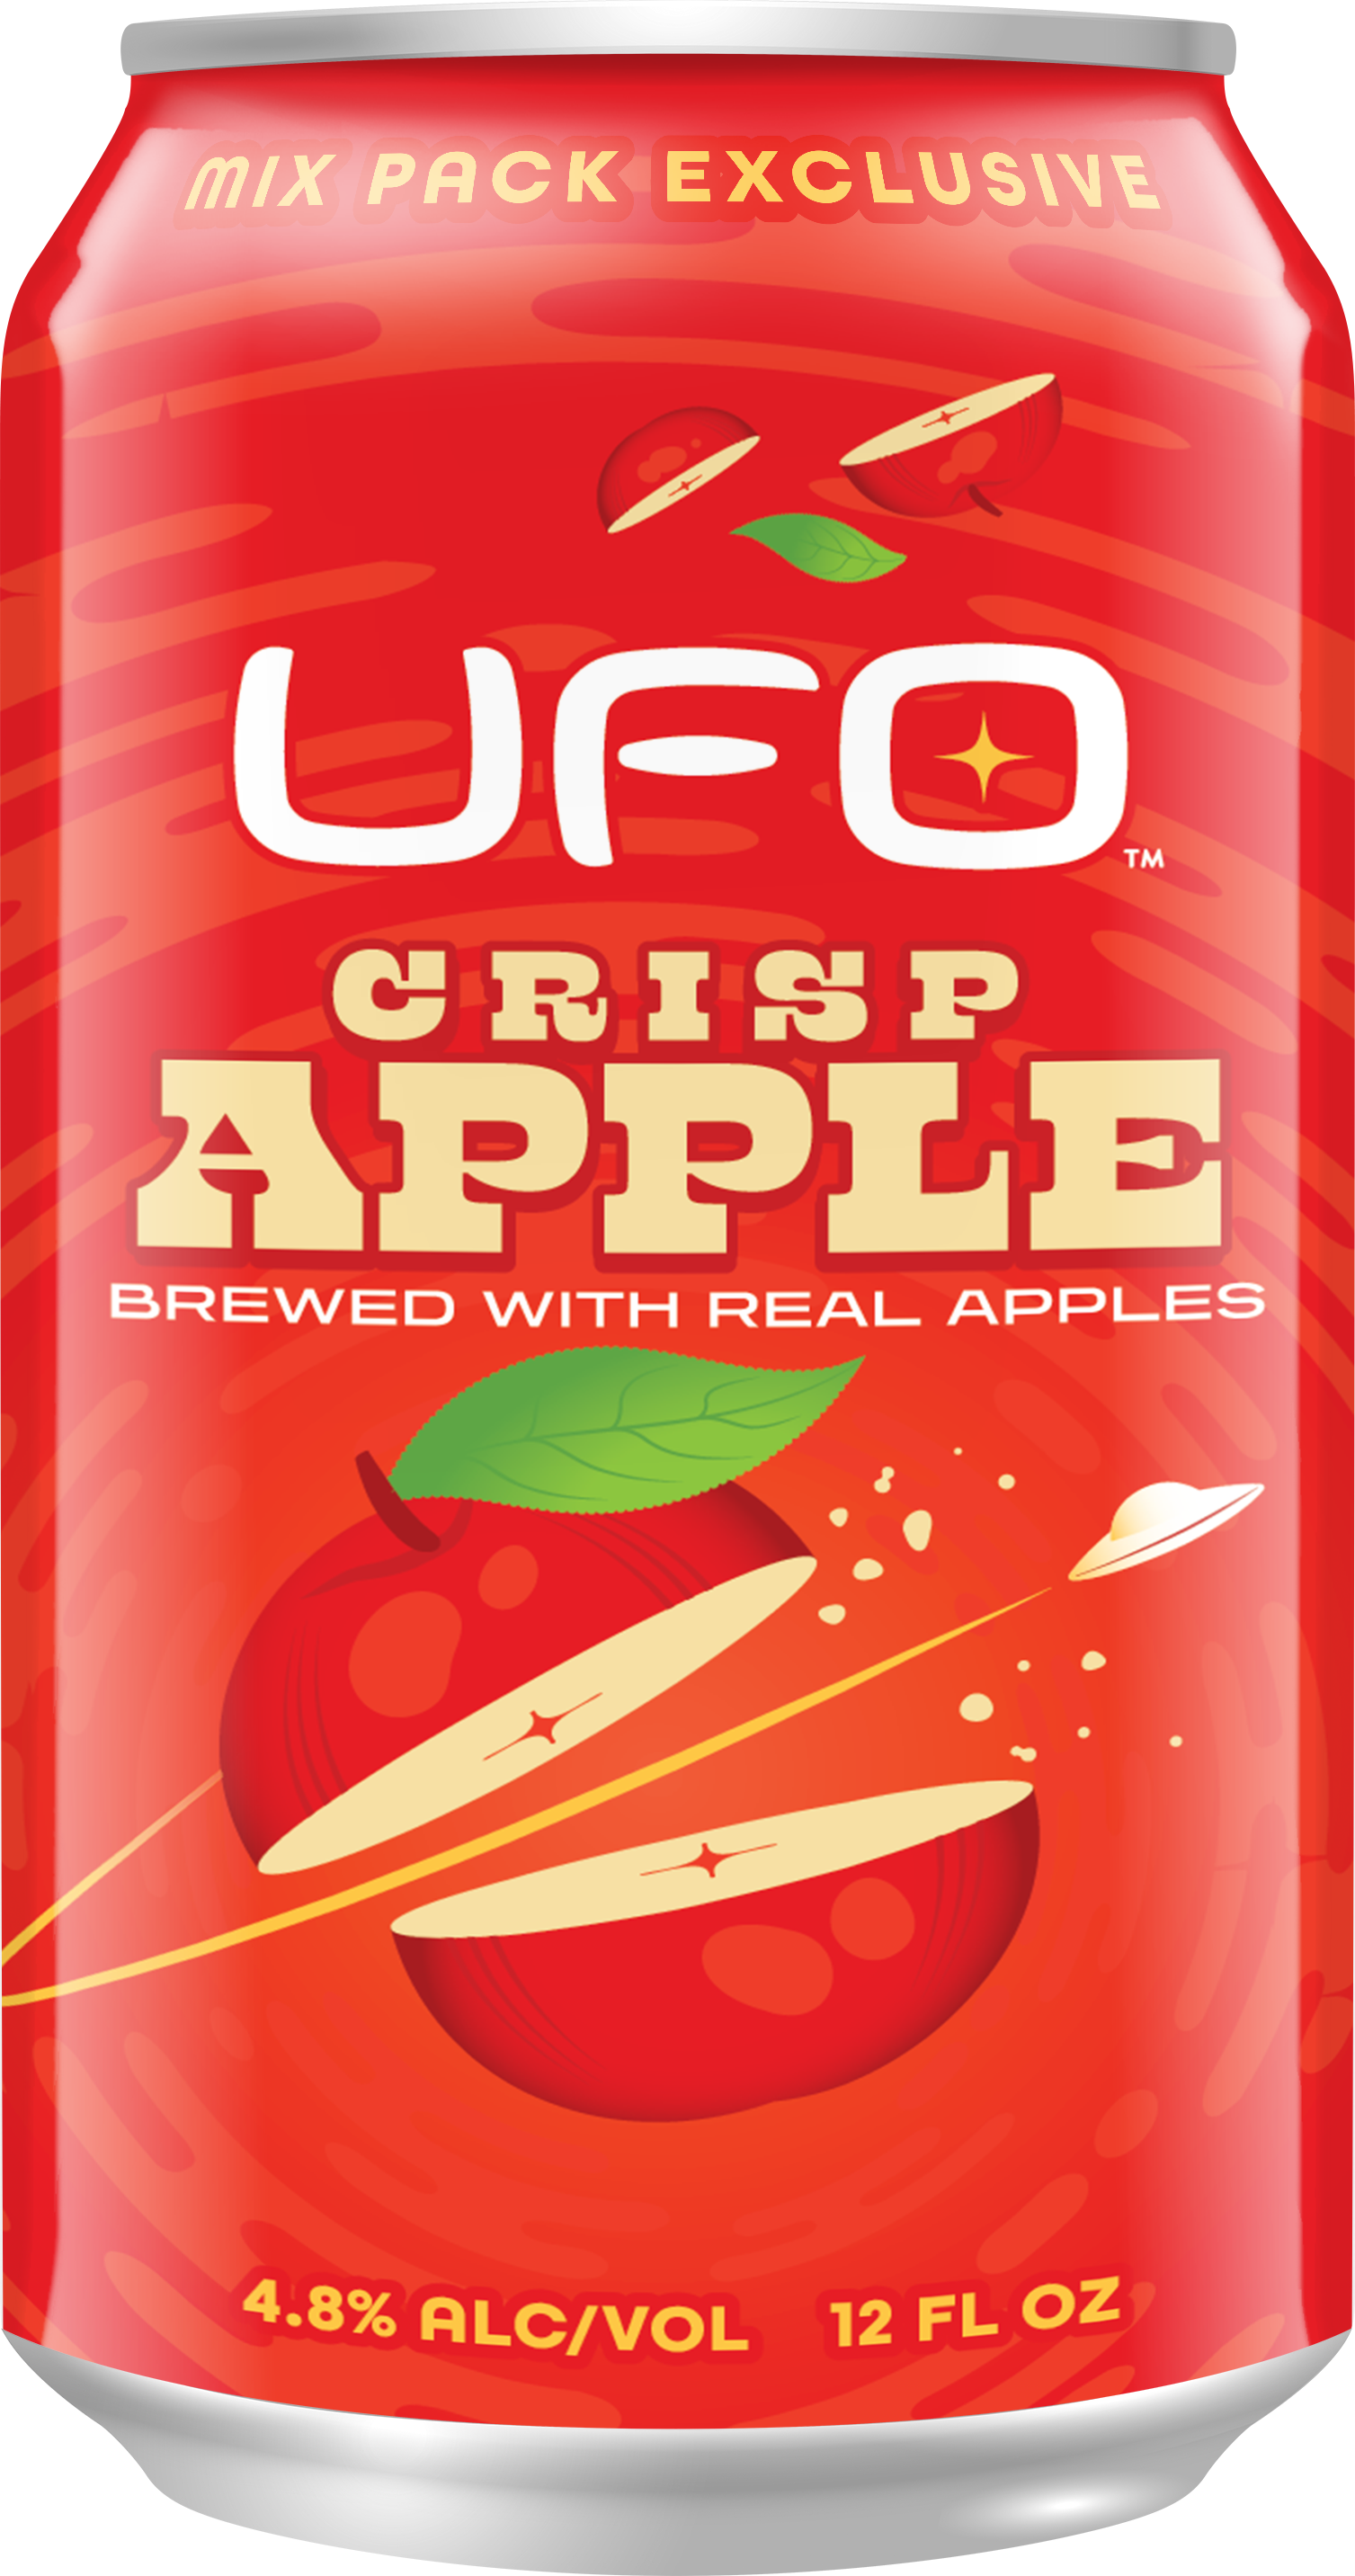 crisp apple